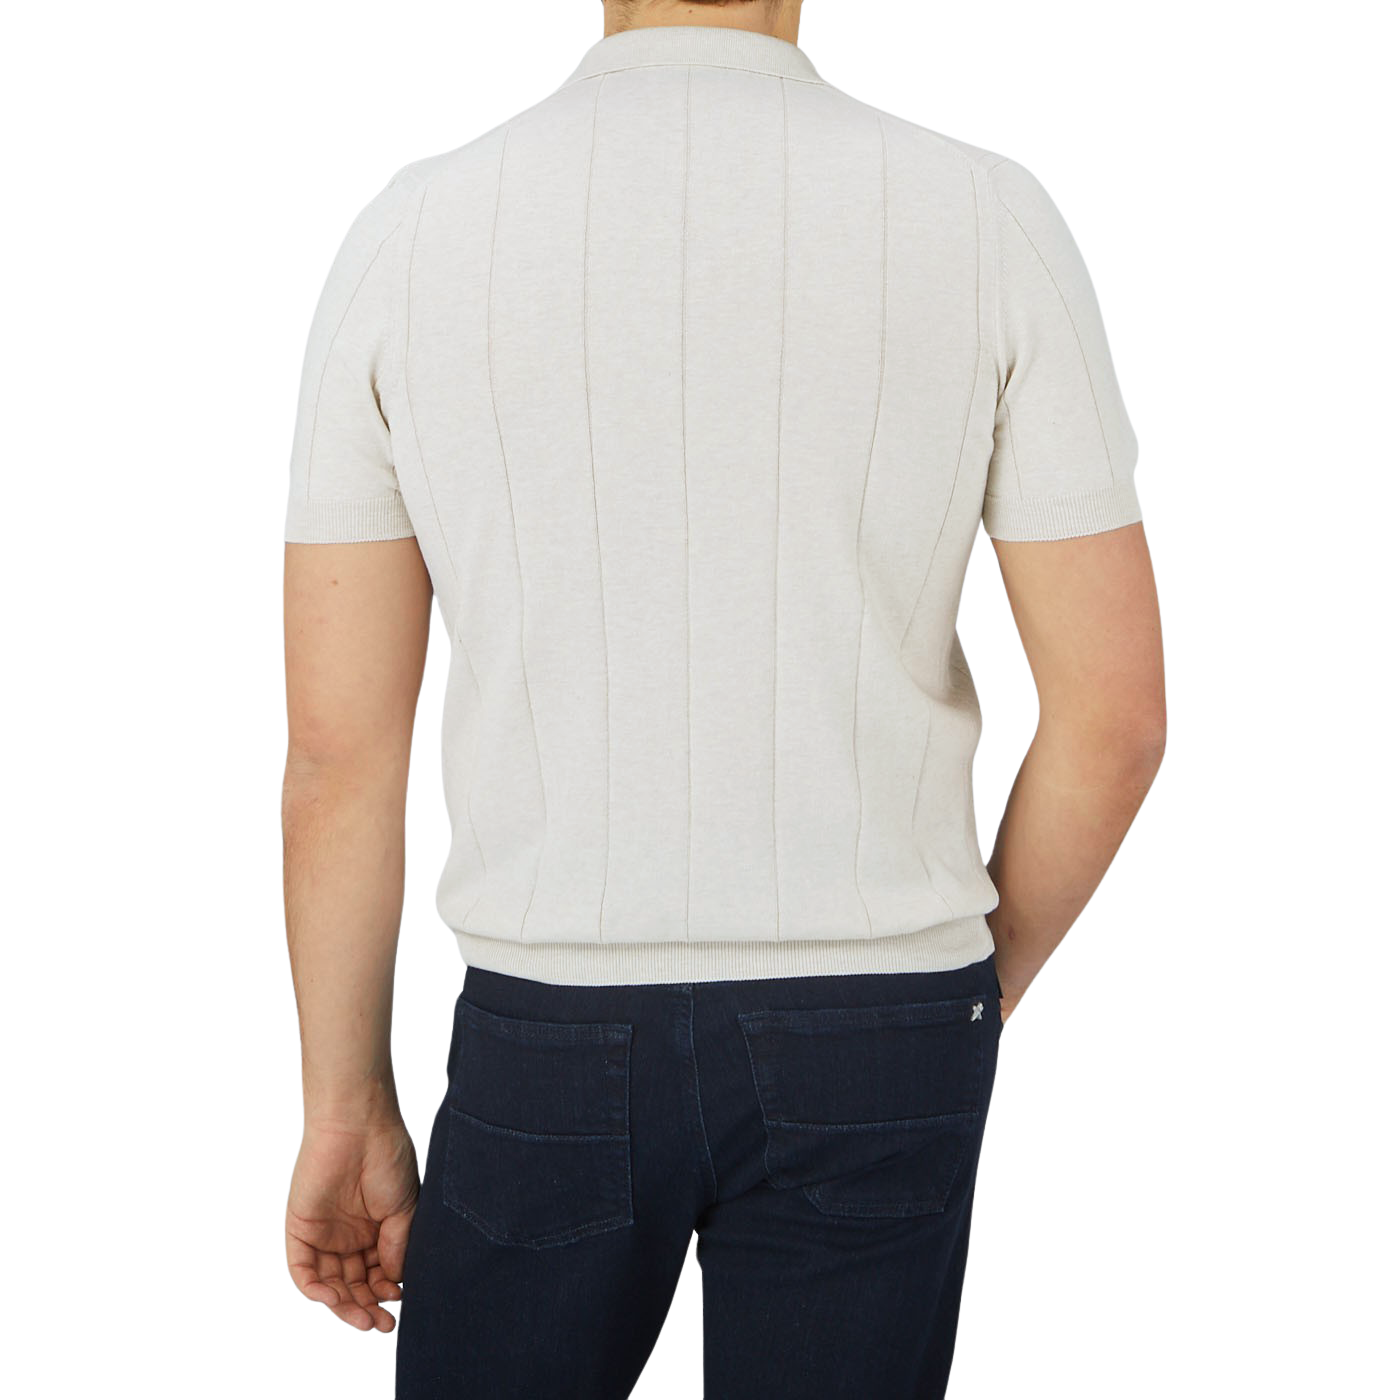 The back view of a man wearing a short-sleeved Gran Sasso Cream Cotton Capri Collar Polo Shirt.